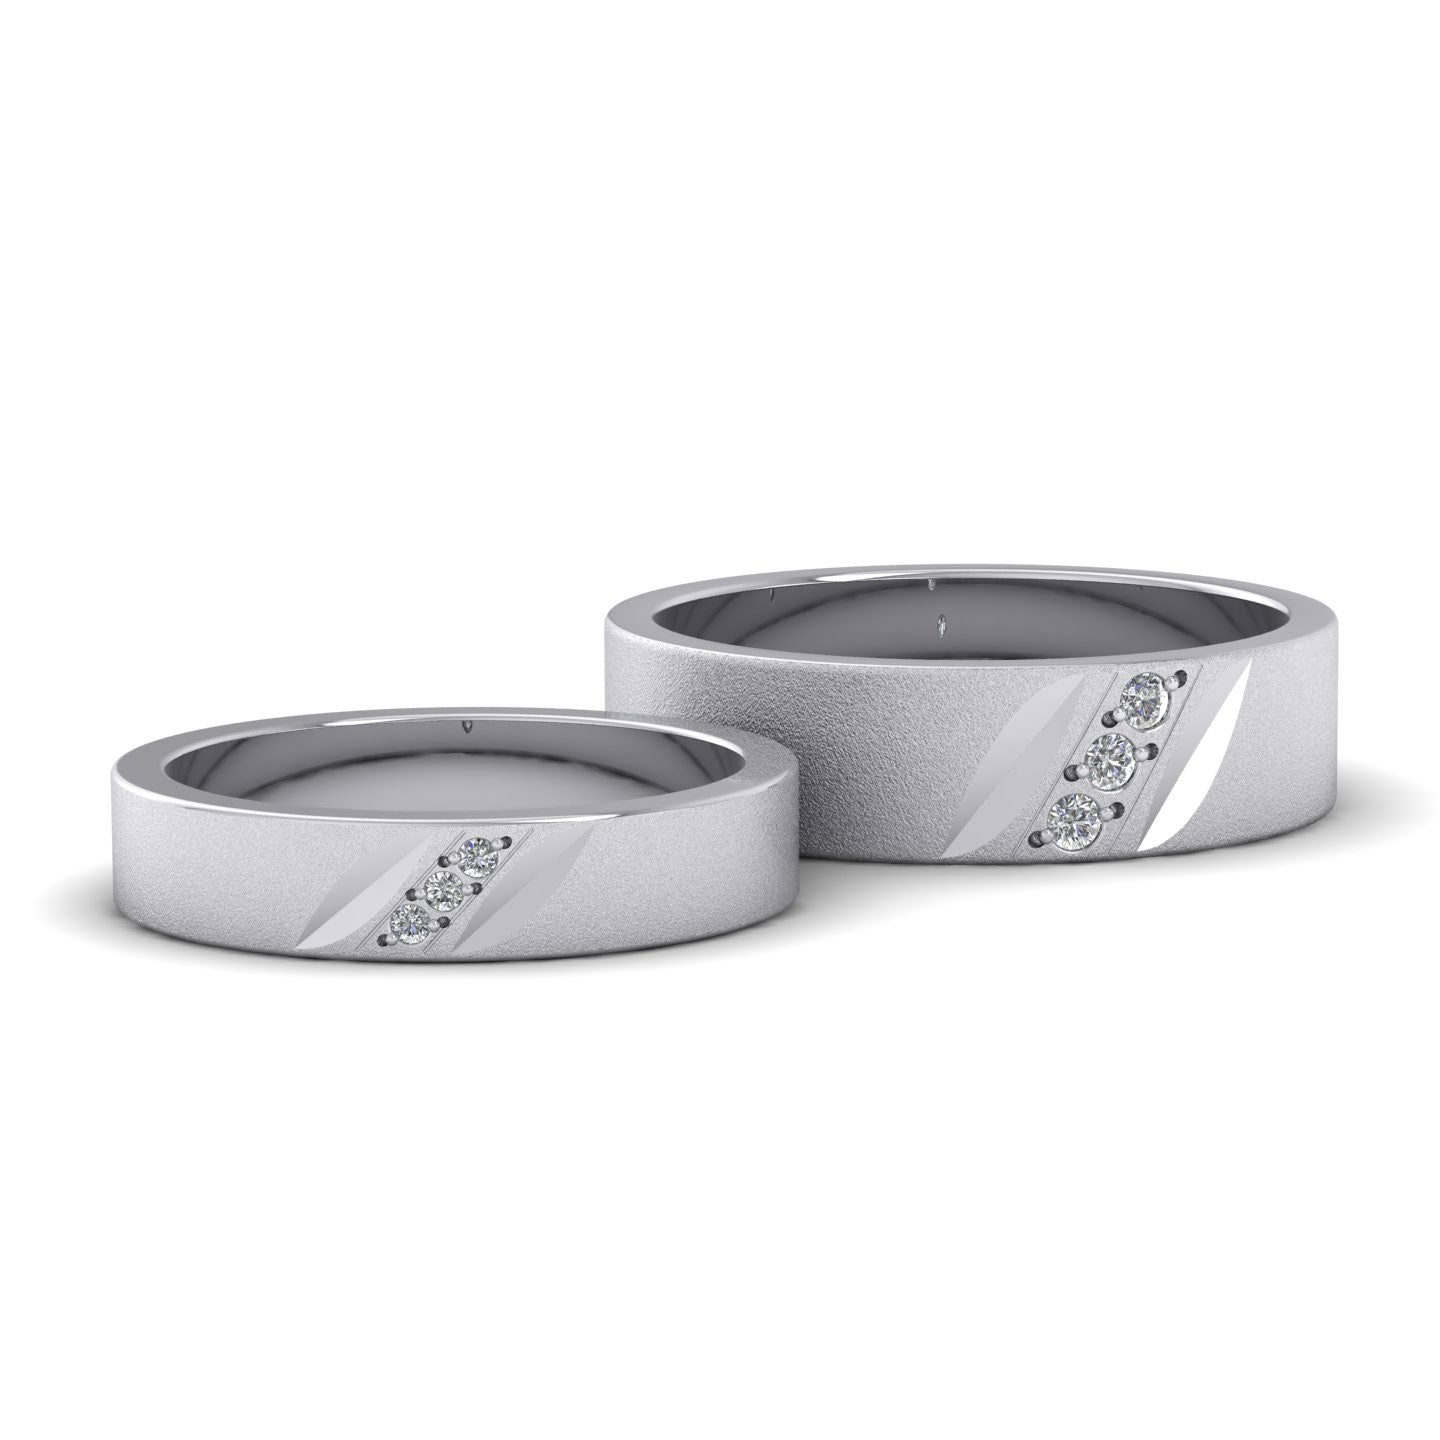 Diagonal Cut And Diamond Set 950 Palladium 4mm Flat Wedding Ring